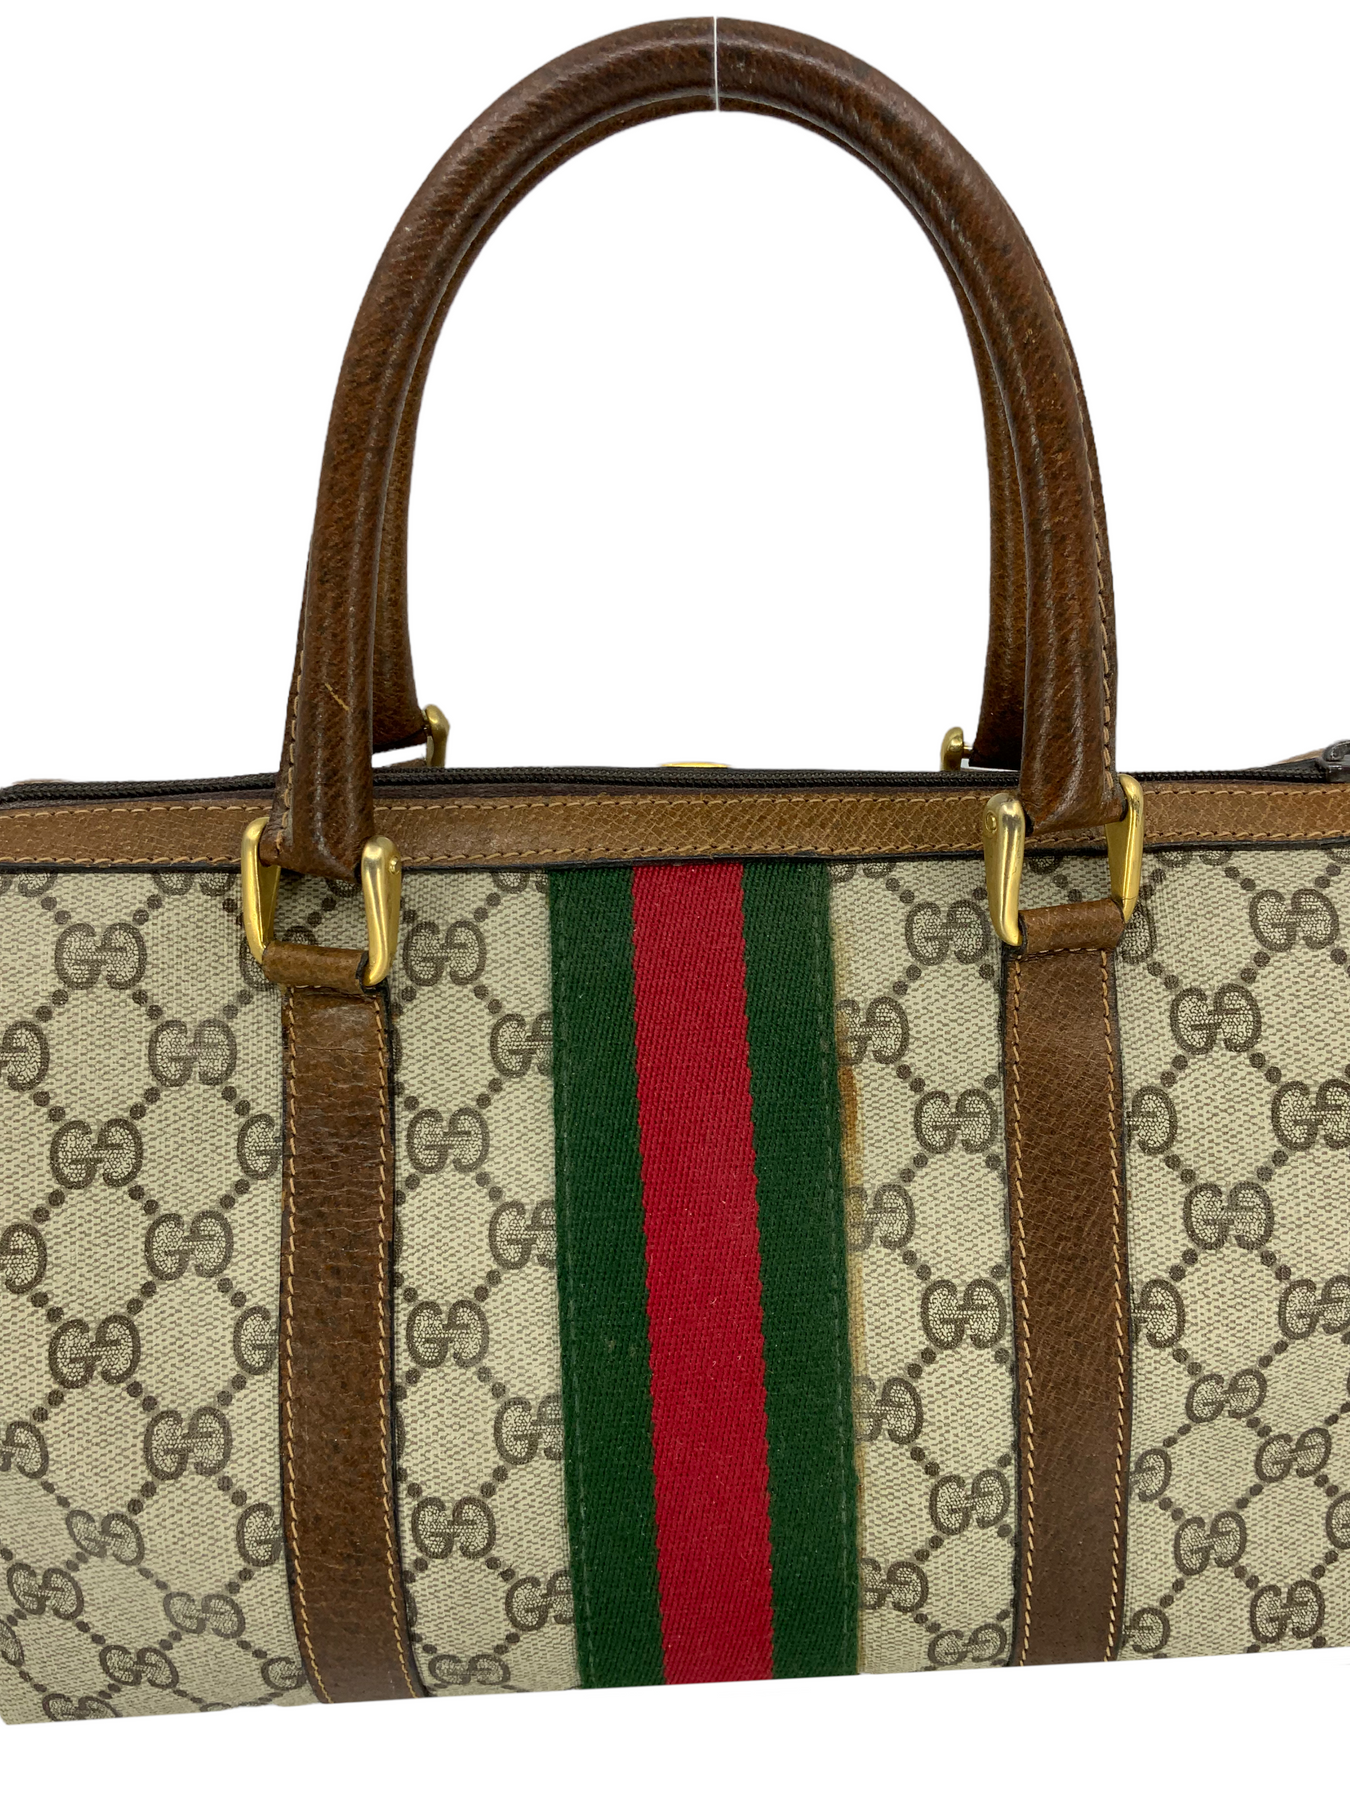 Gucci Boston Bag Satchels